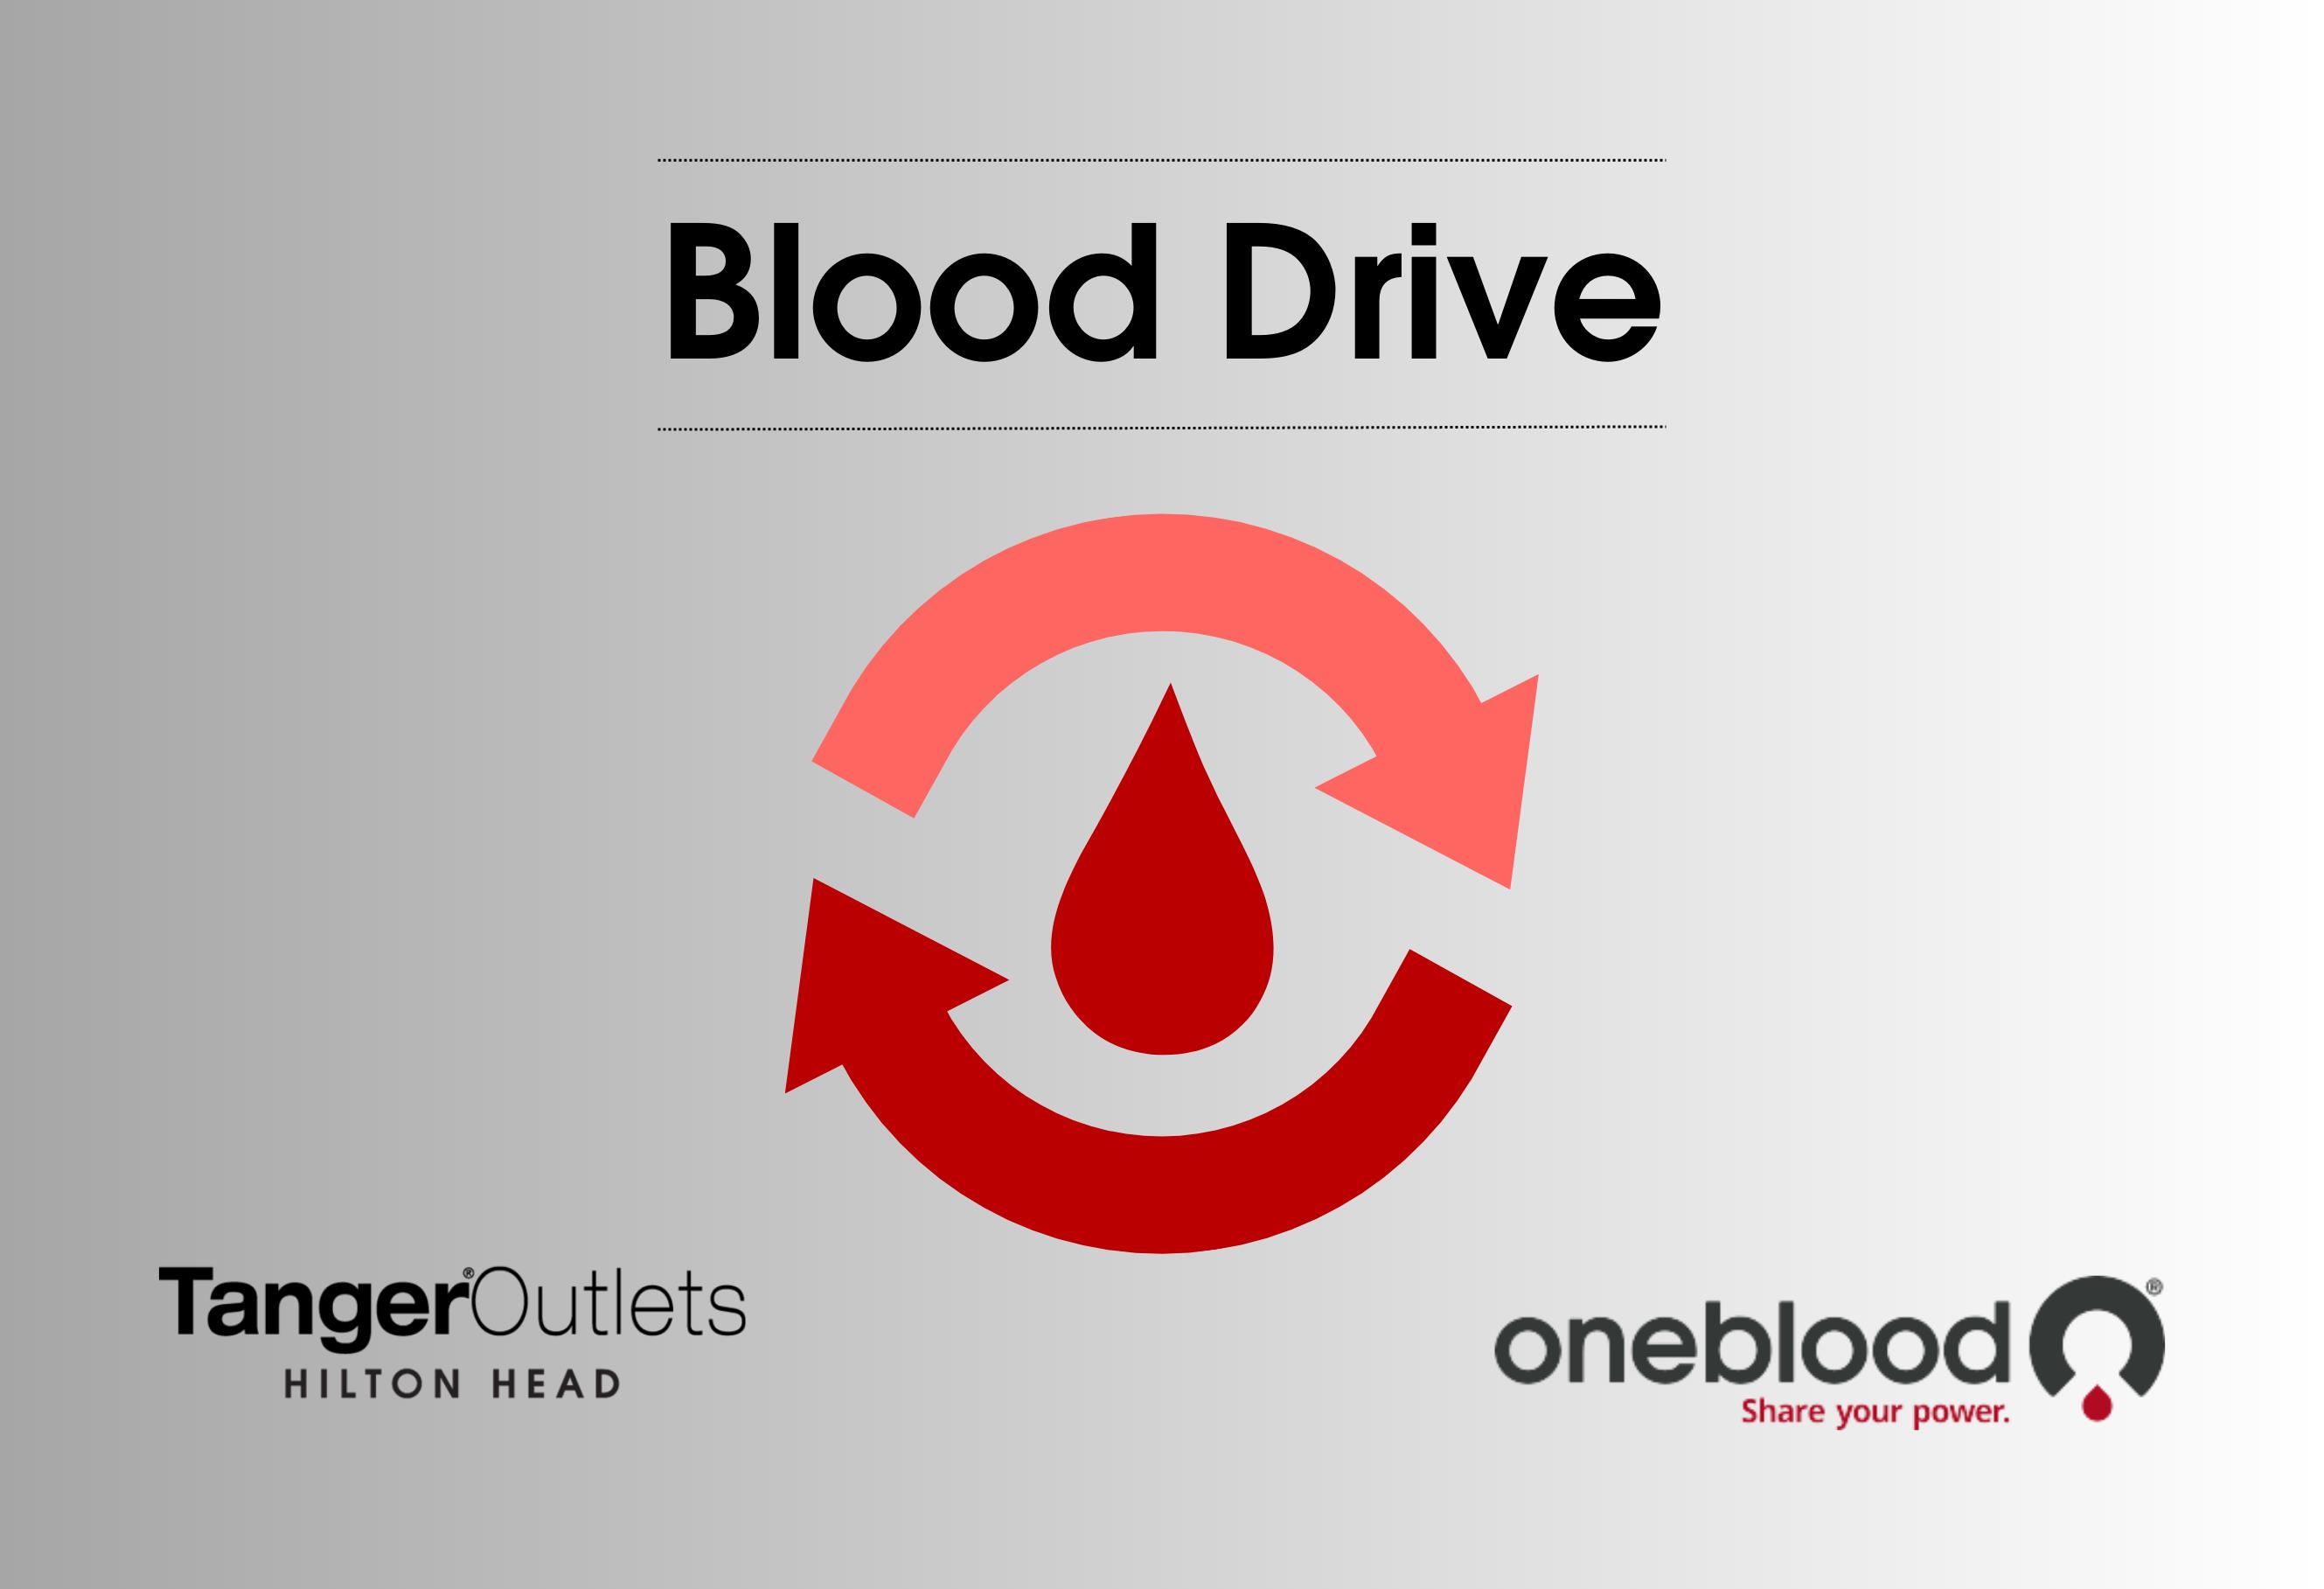 OneBlood Blood Drive